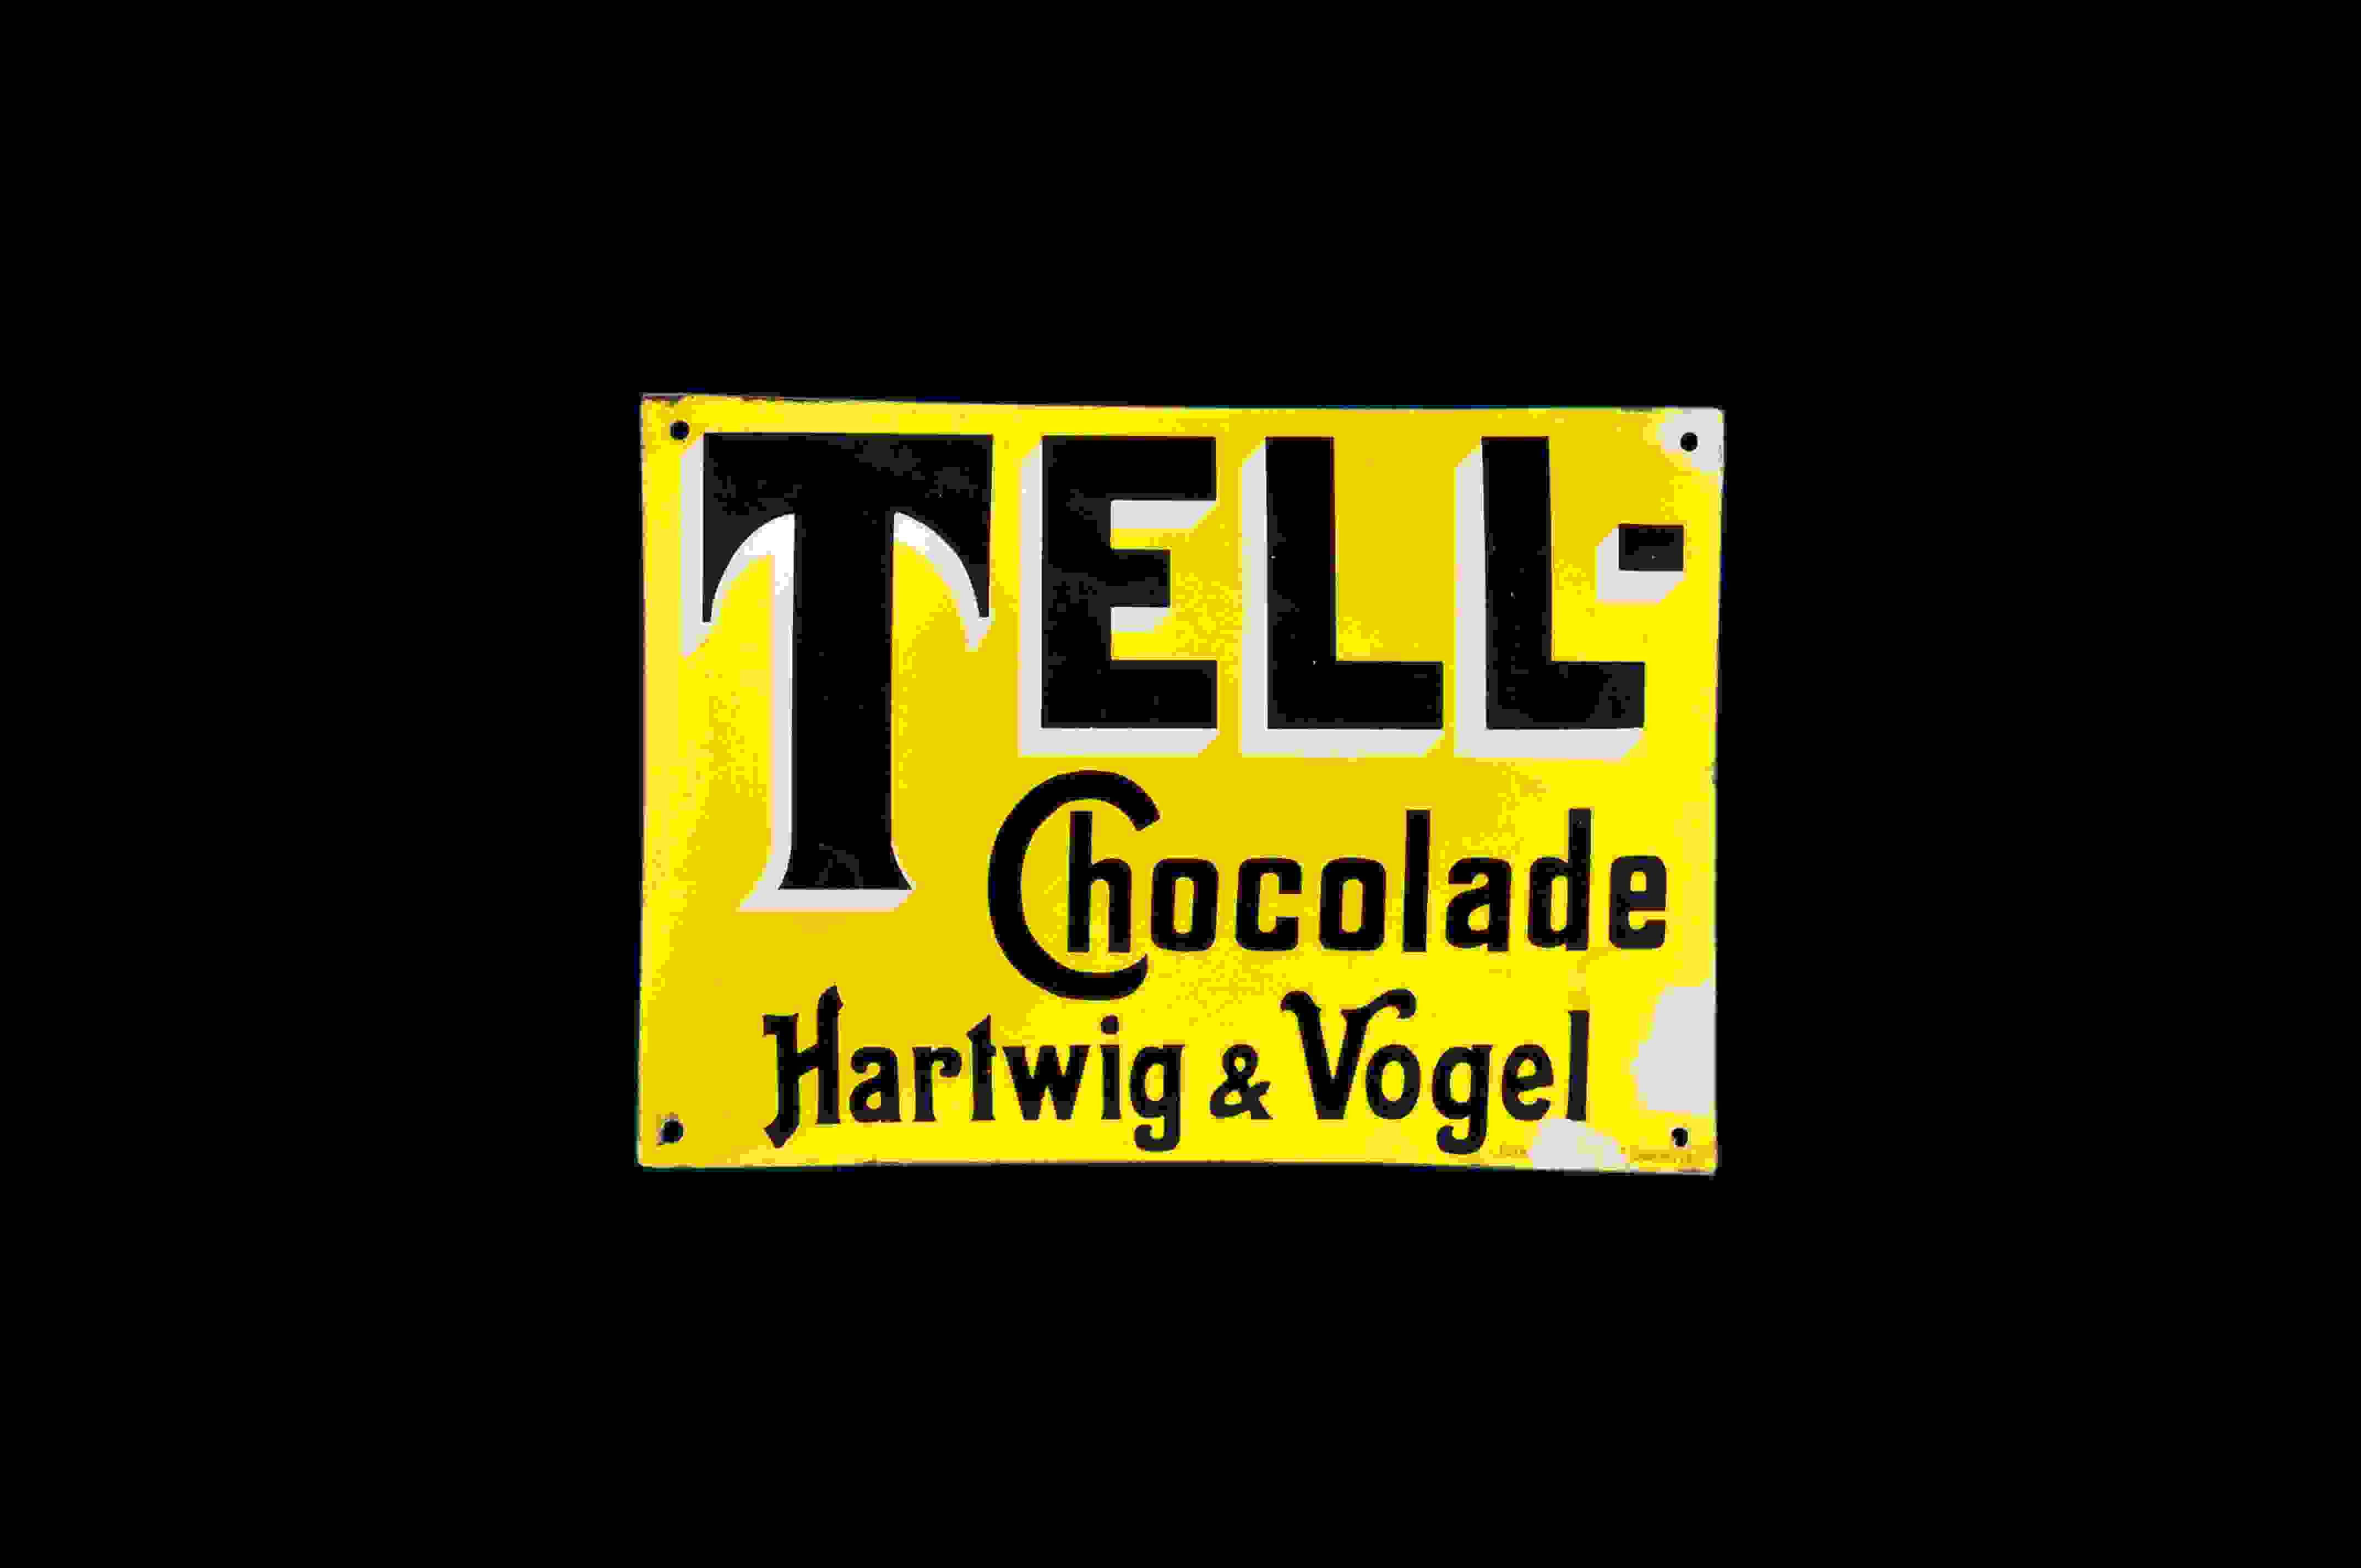 Tell Chocolade Hartwig & Vogel 